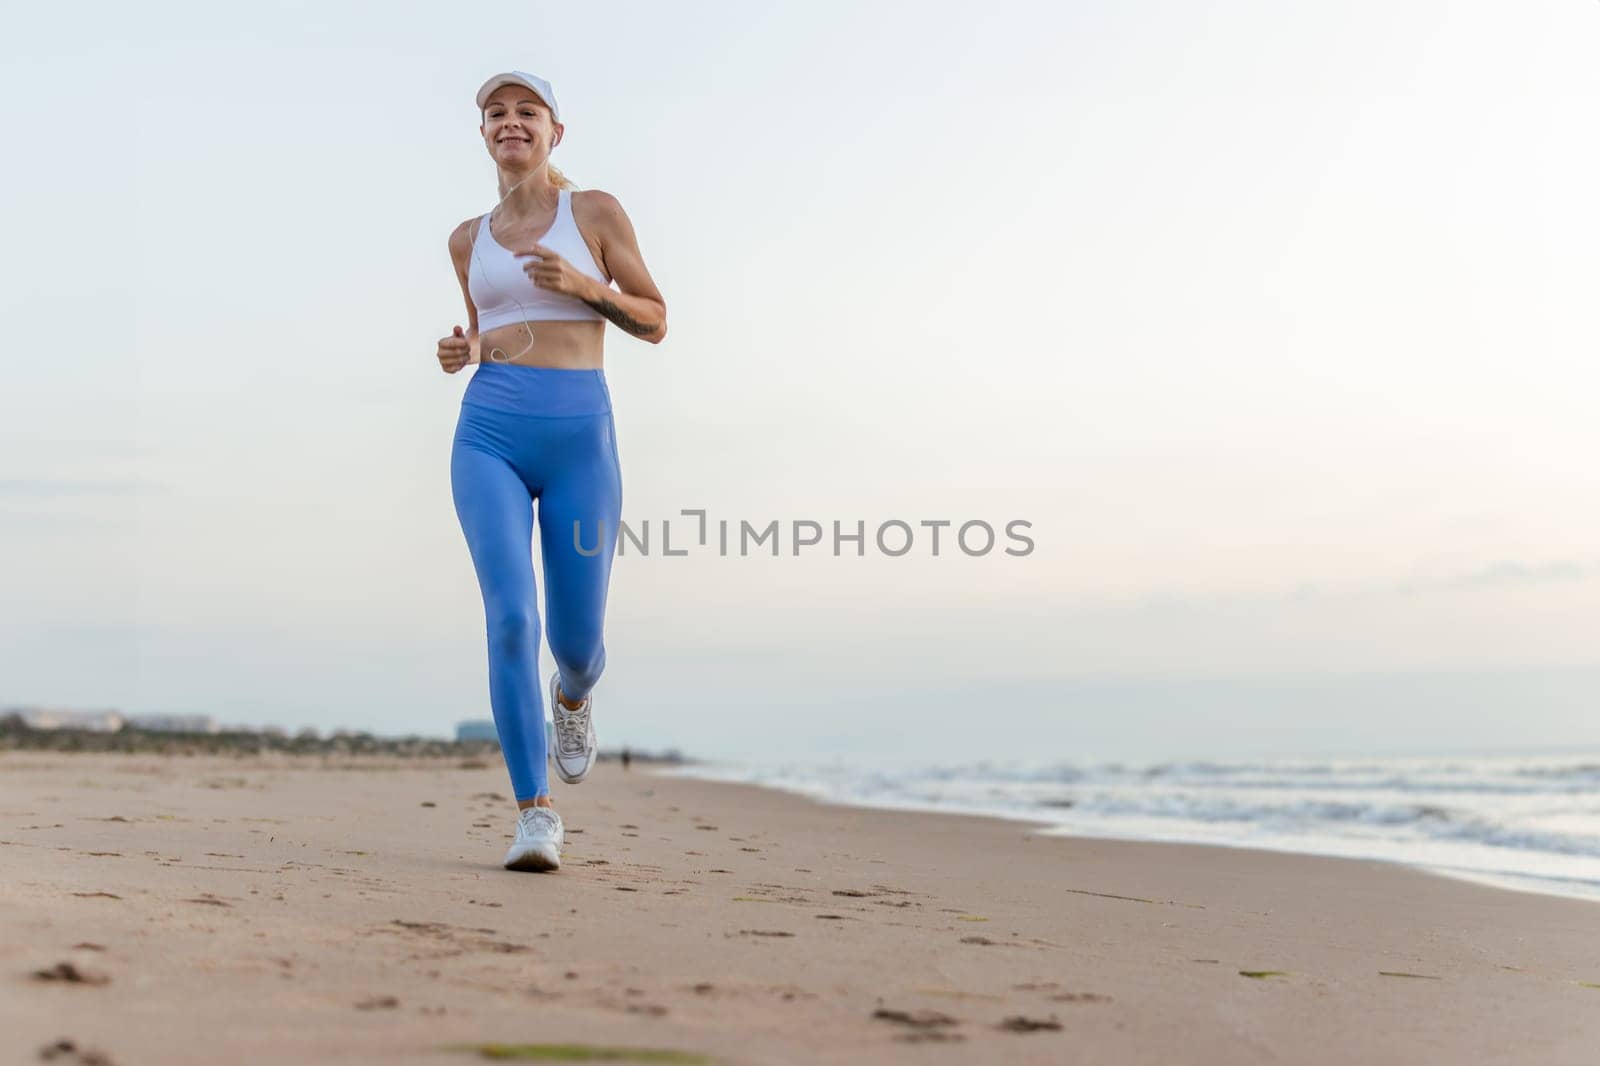 Beautiful sportive woman running along beautiful sandy beach, healthy lifestyle, enjoying active summer vacation near the sea. High quality photo